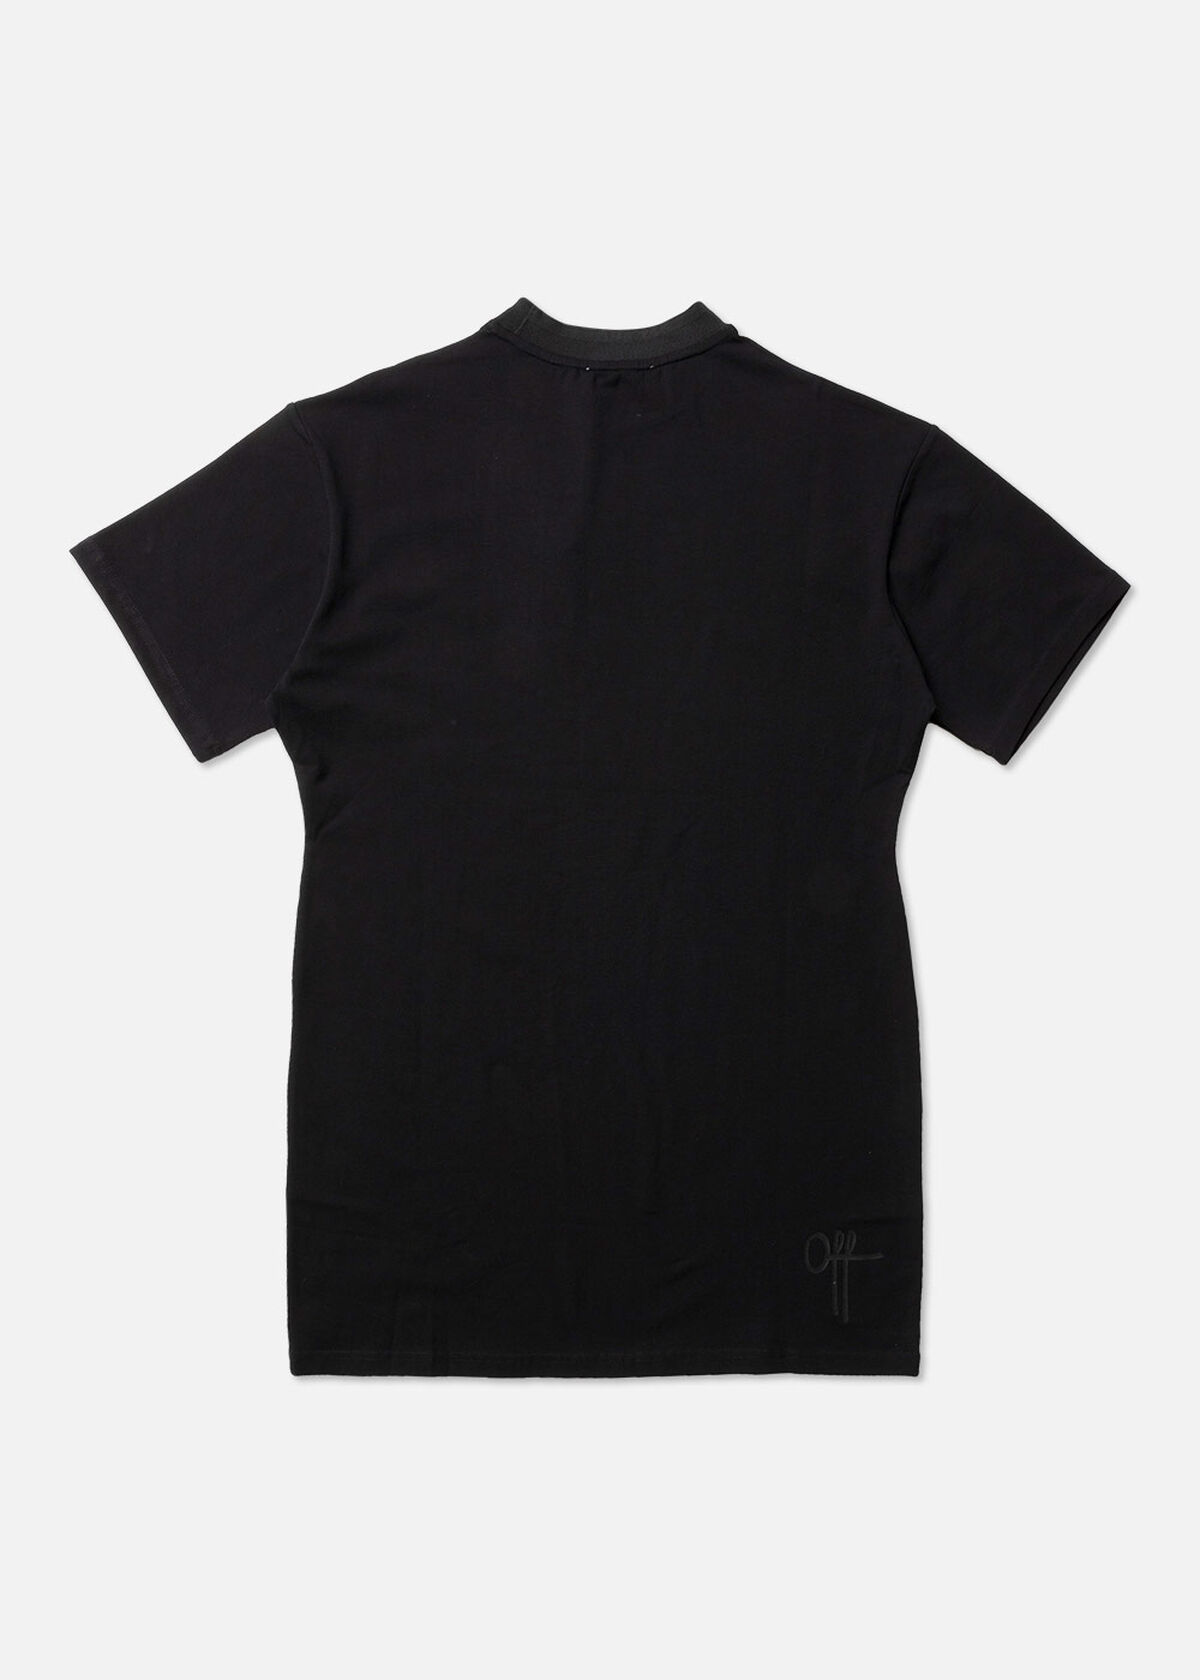 OTP BL T-shirt Dress, Black, hi-res